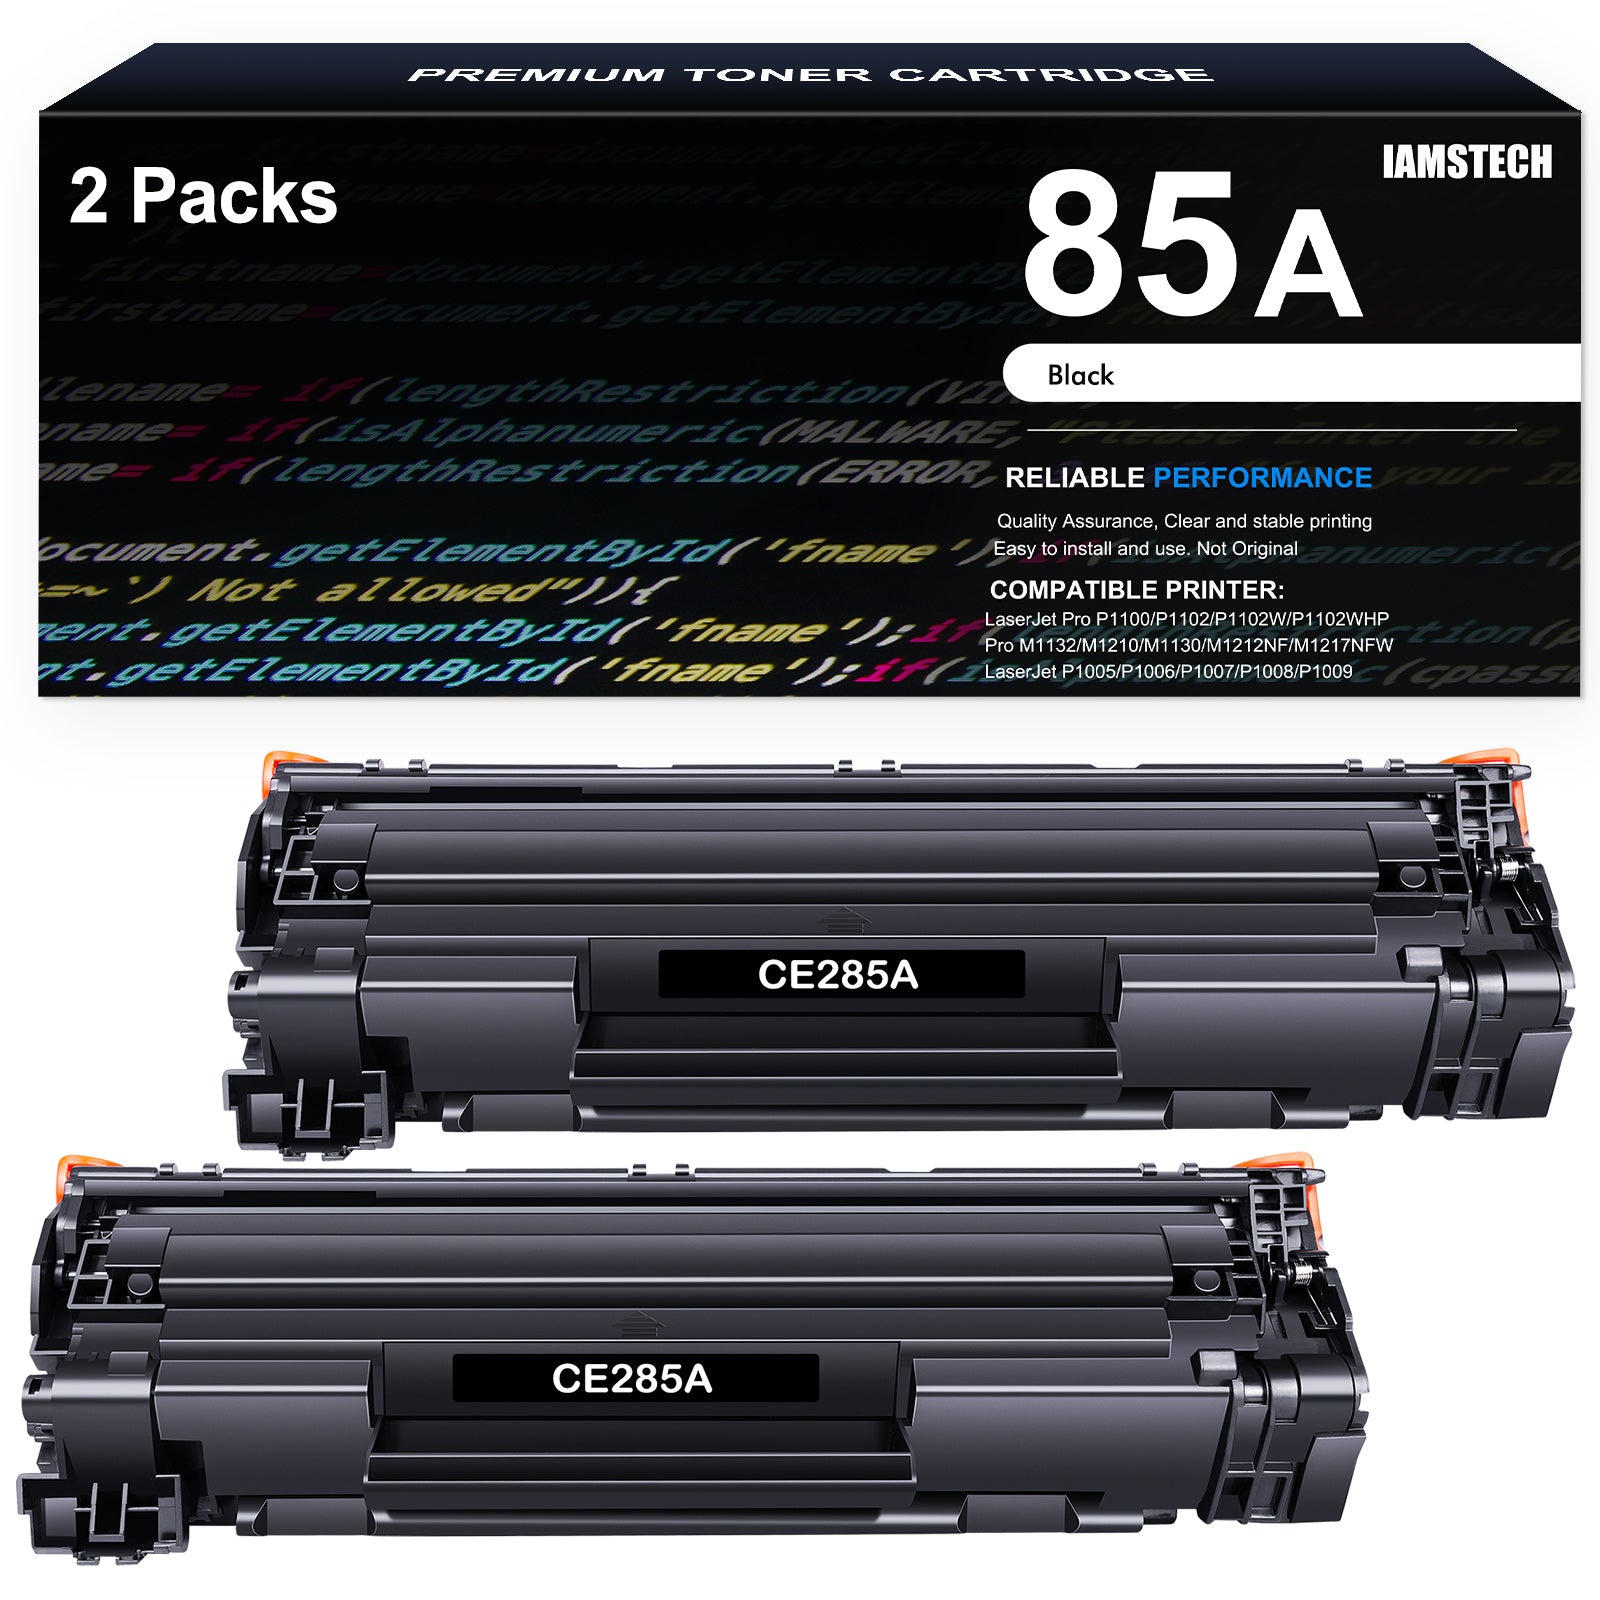 85A Black Compatible Toner Cartridge for HP 85A CE285A CE285D 285A Laserjet Pro P1102w M1212nf MFP P1102 P1102whp M1217nfw M1132 1102w CE285D M1212 M1217 Printer Ink (Black, 2-Pack, CE285AT1)